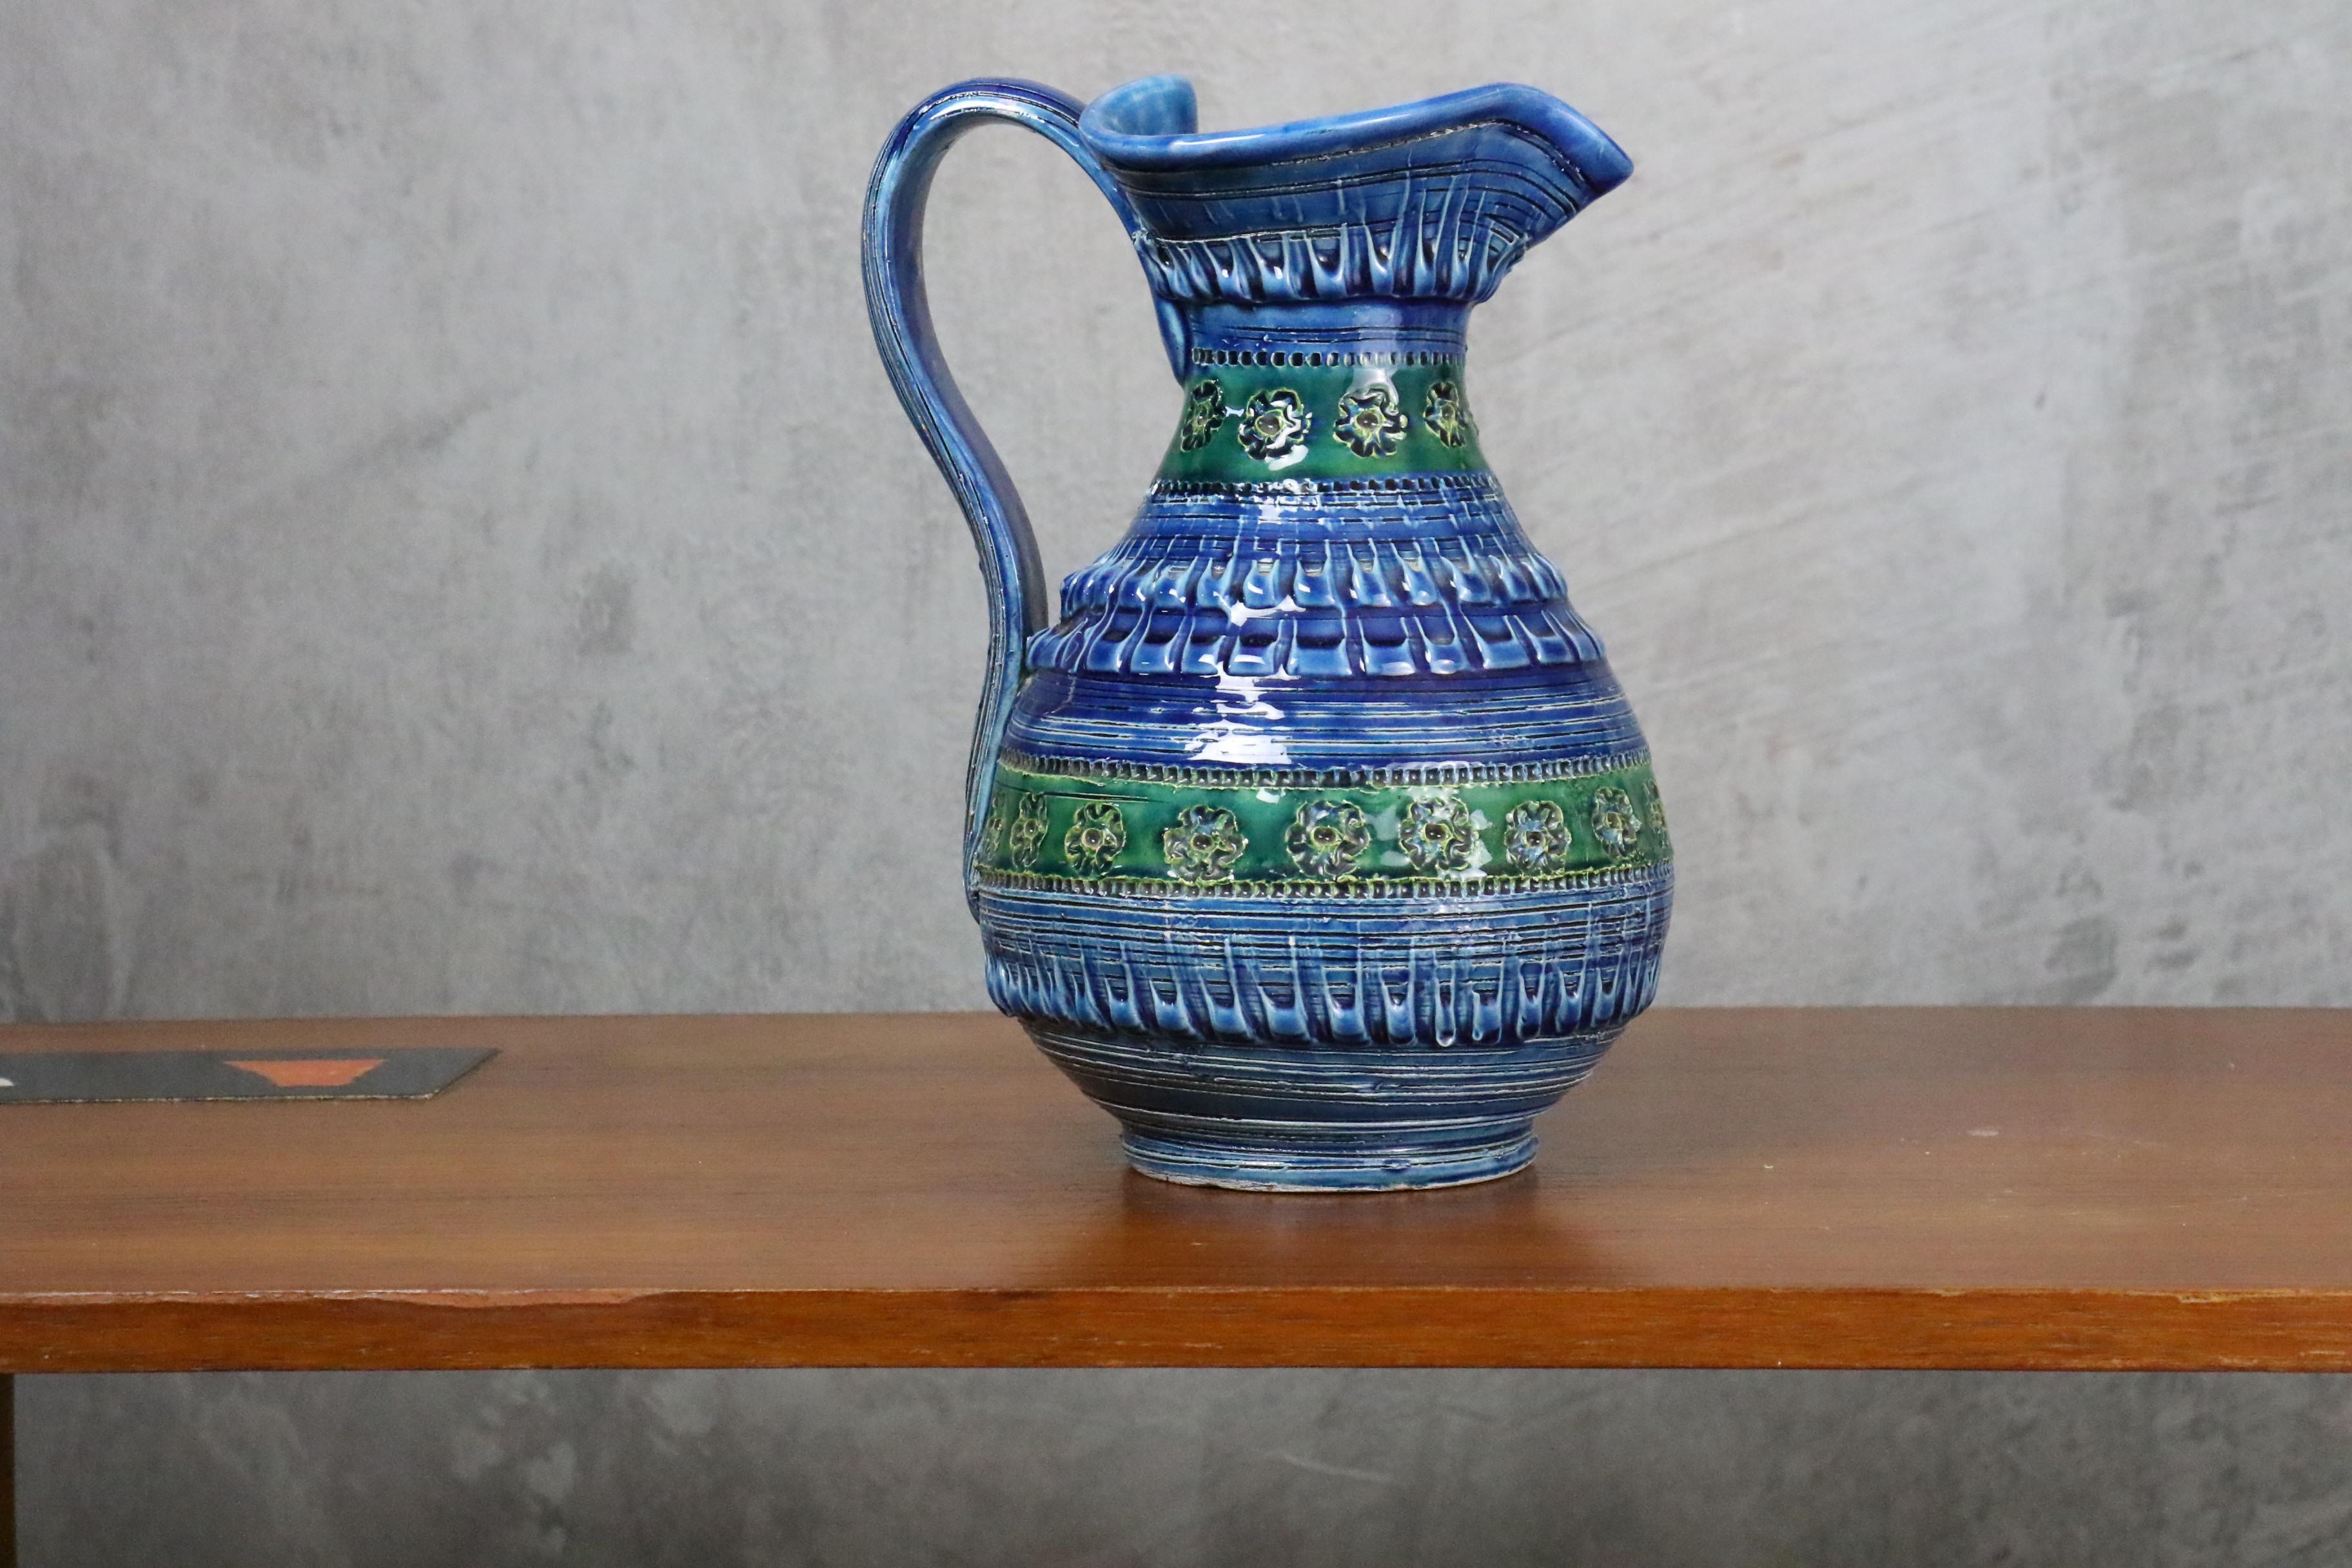 Terrakotta-Keramik-Vase Rimini in Blau von Aldo Londi für Bitossi, Italien 1960er Jahre (20. Jahrhundert) im Angebot